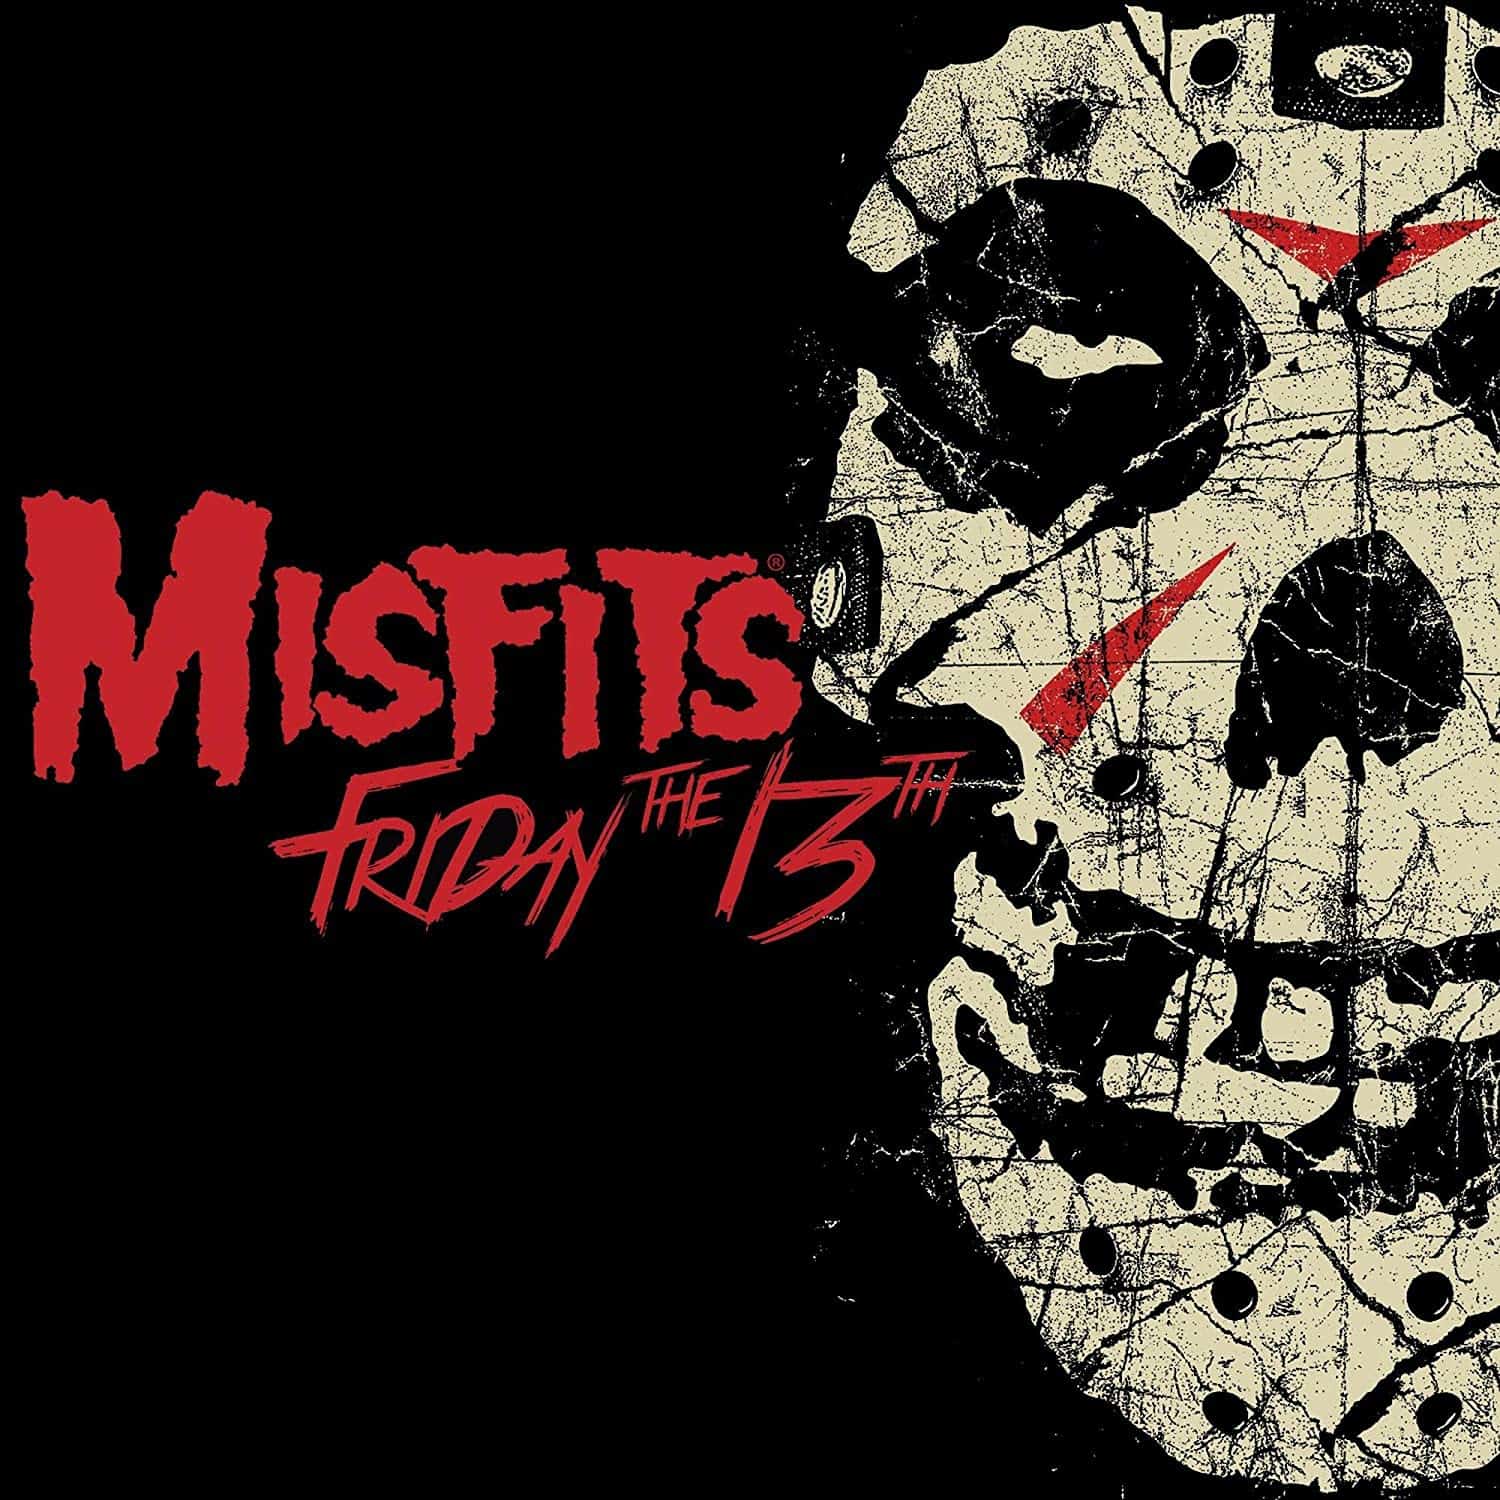 misfits-friday-the-13th-vinyl-record-album1